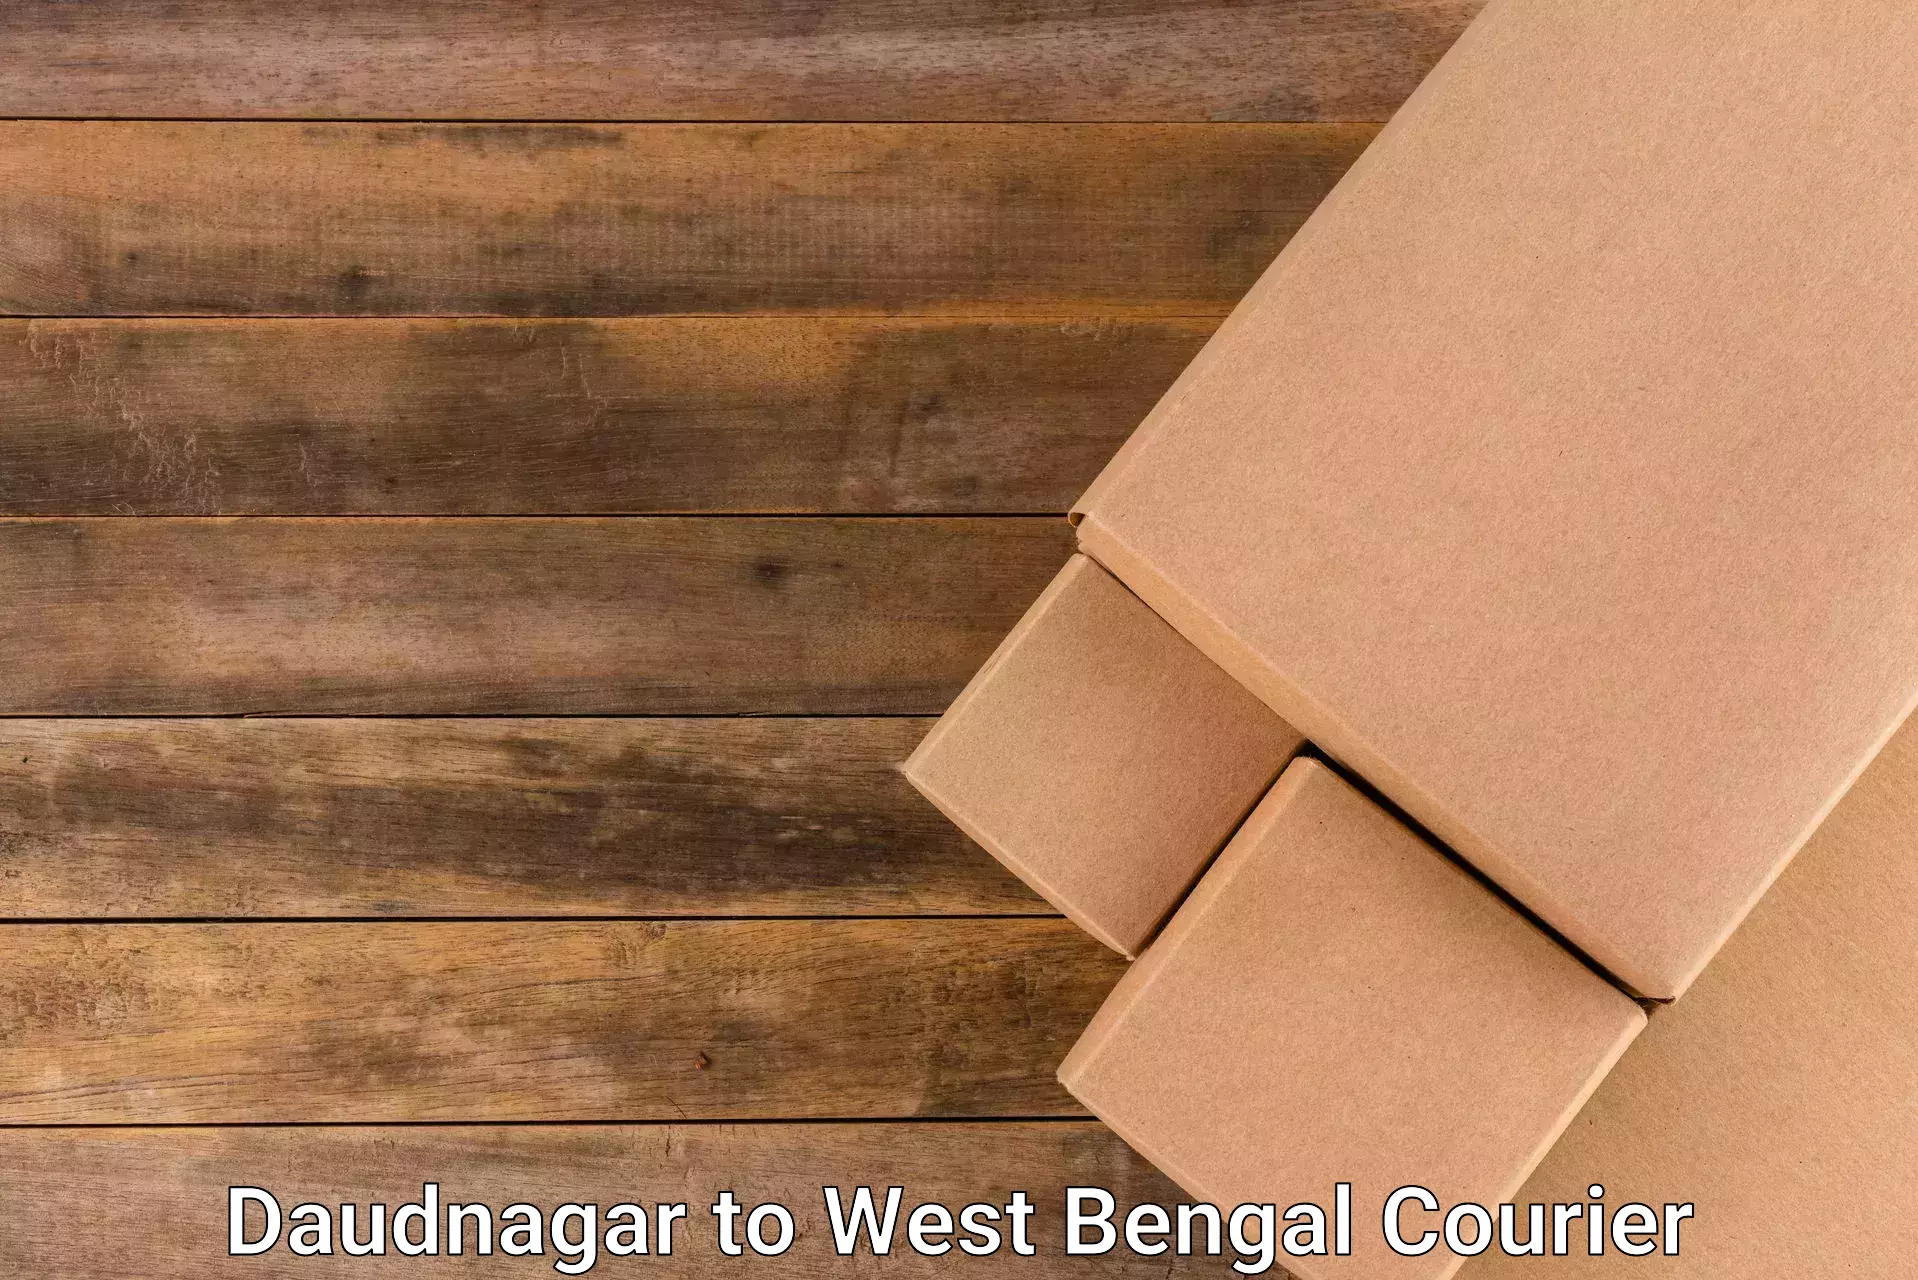 Logistics service provider Daudnagar to Halisahar